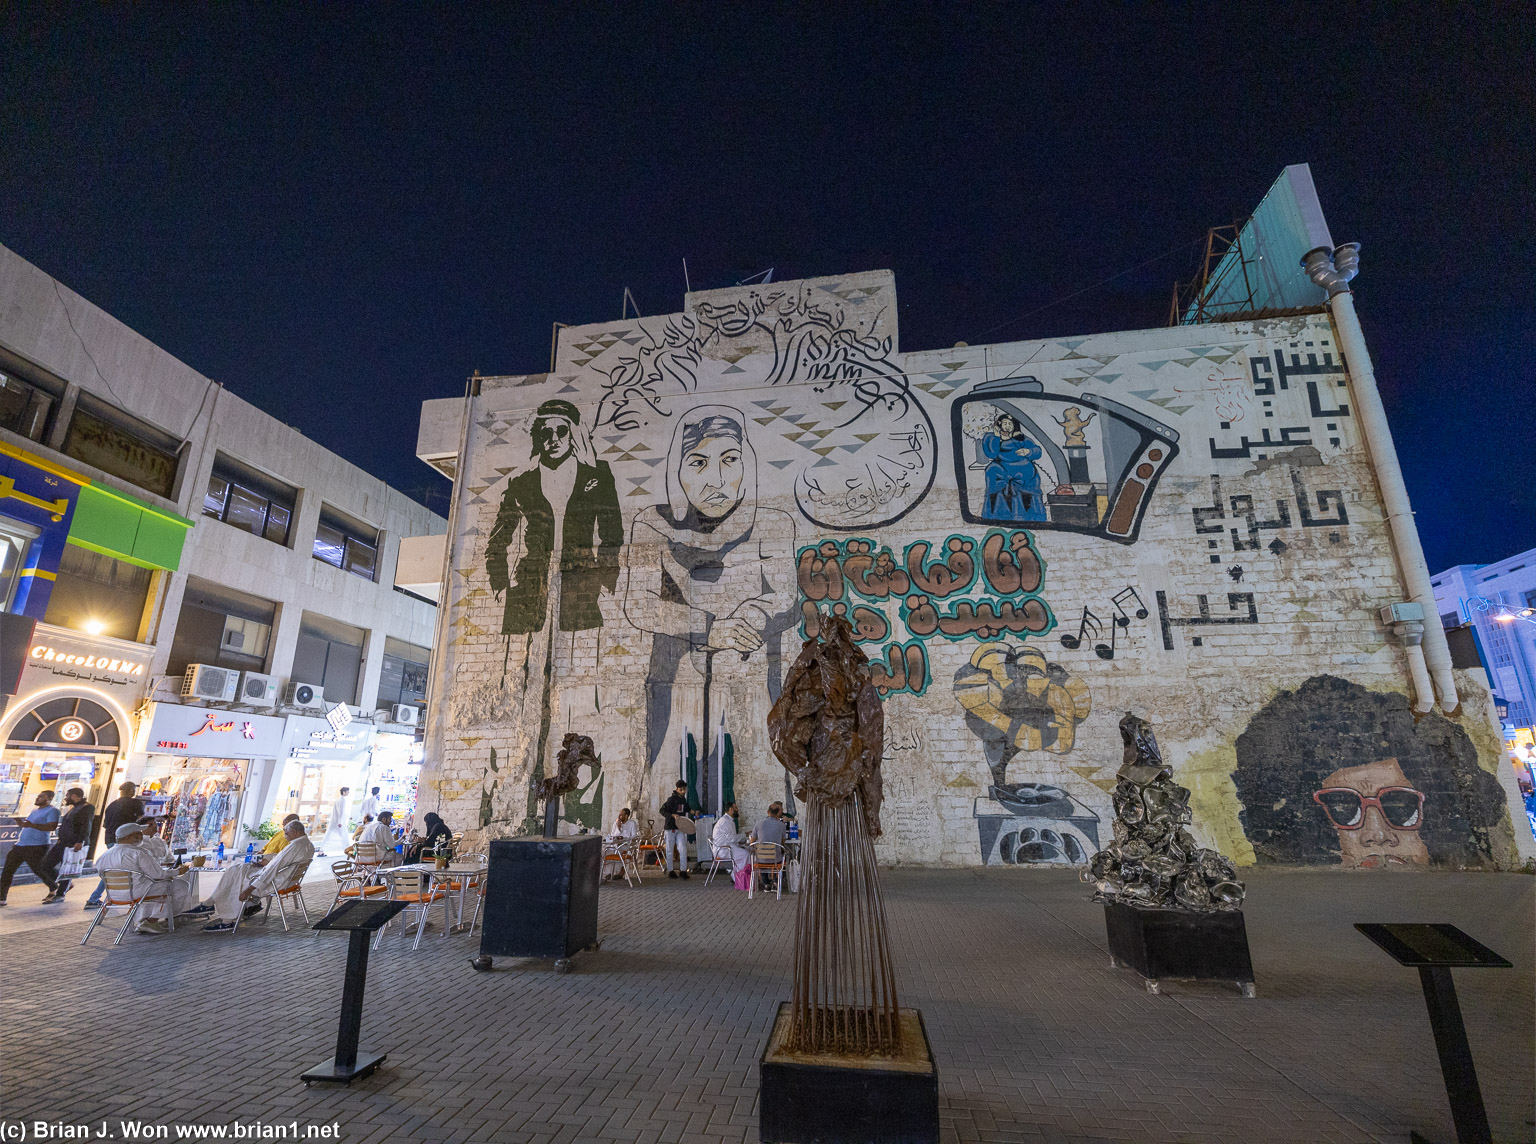 Al Mubarakiya market has some street art and sculpture.